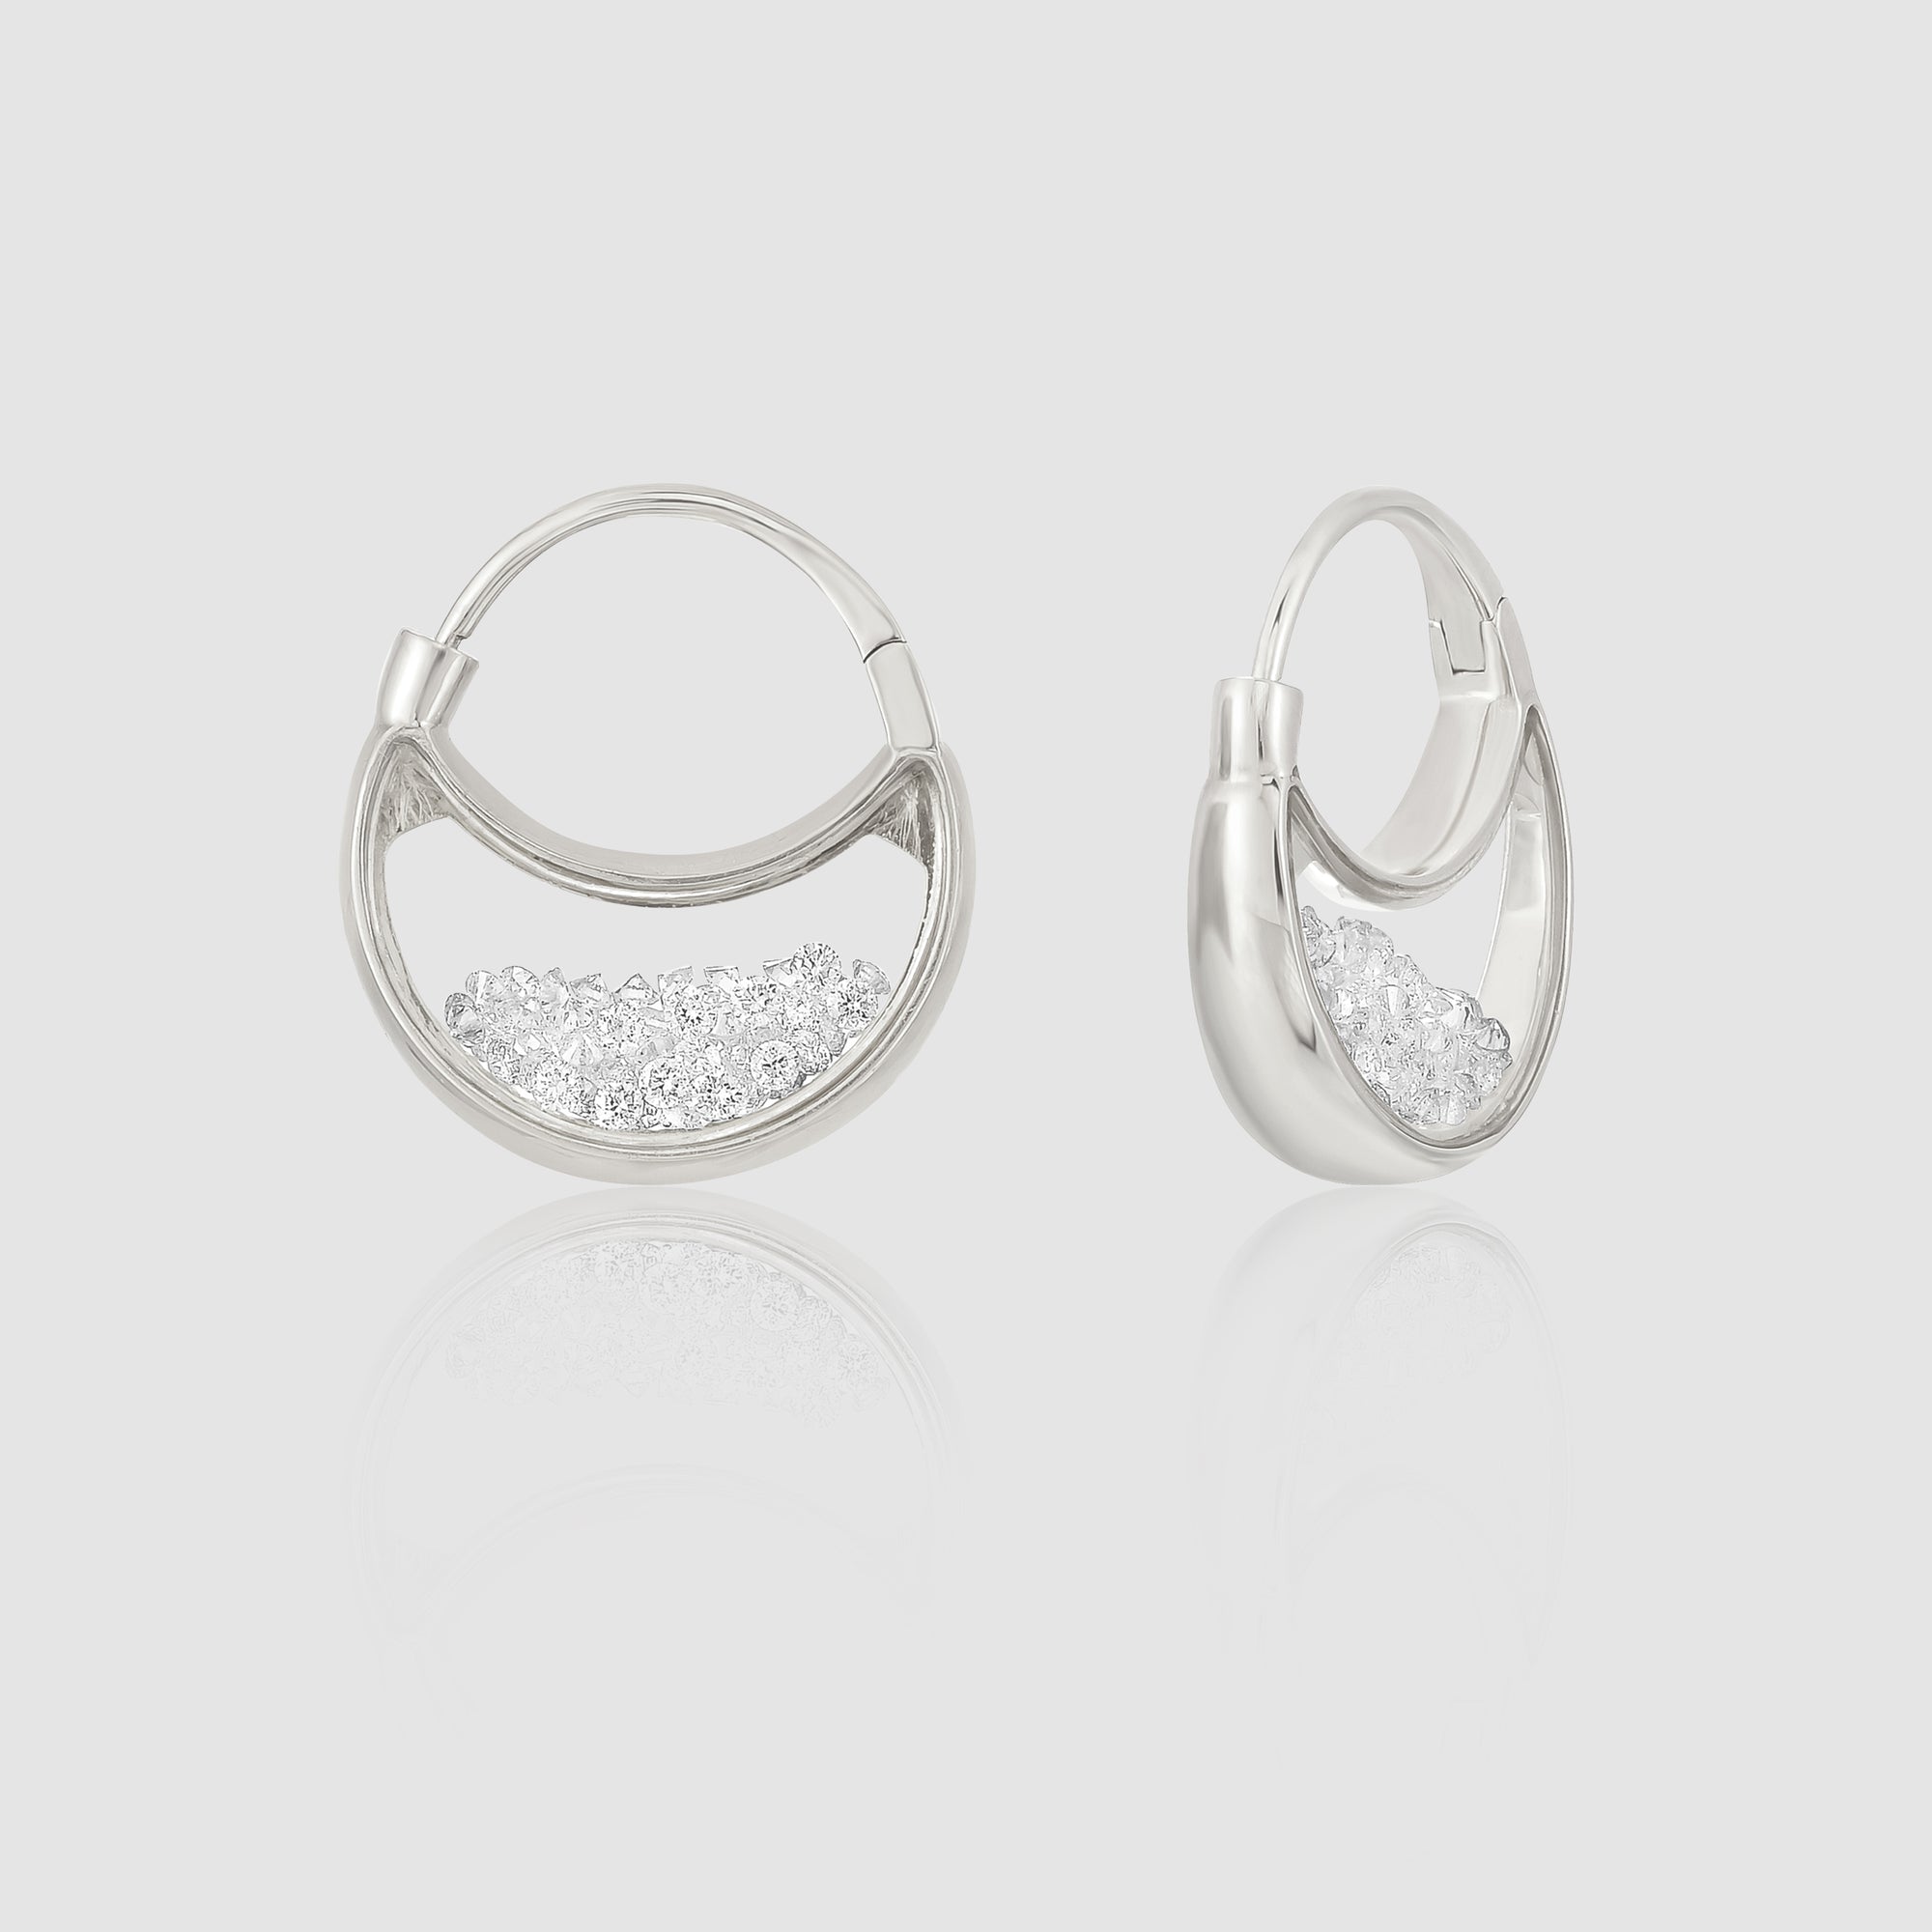 Moritz Glik - The Purses Diamond Earrings - (White Gold/Diamond) view 1